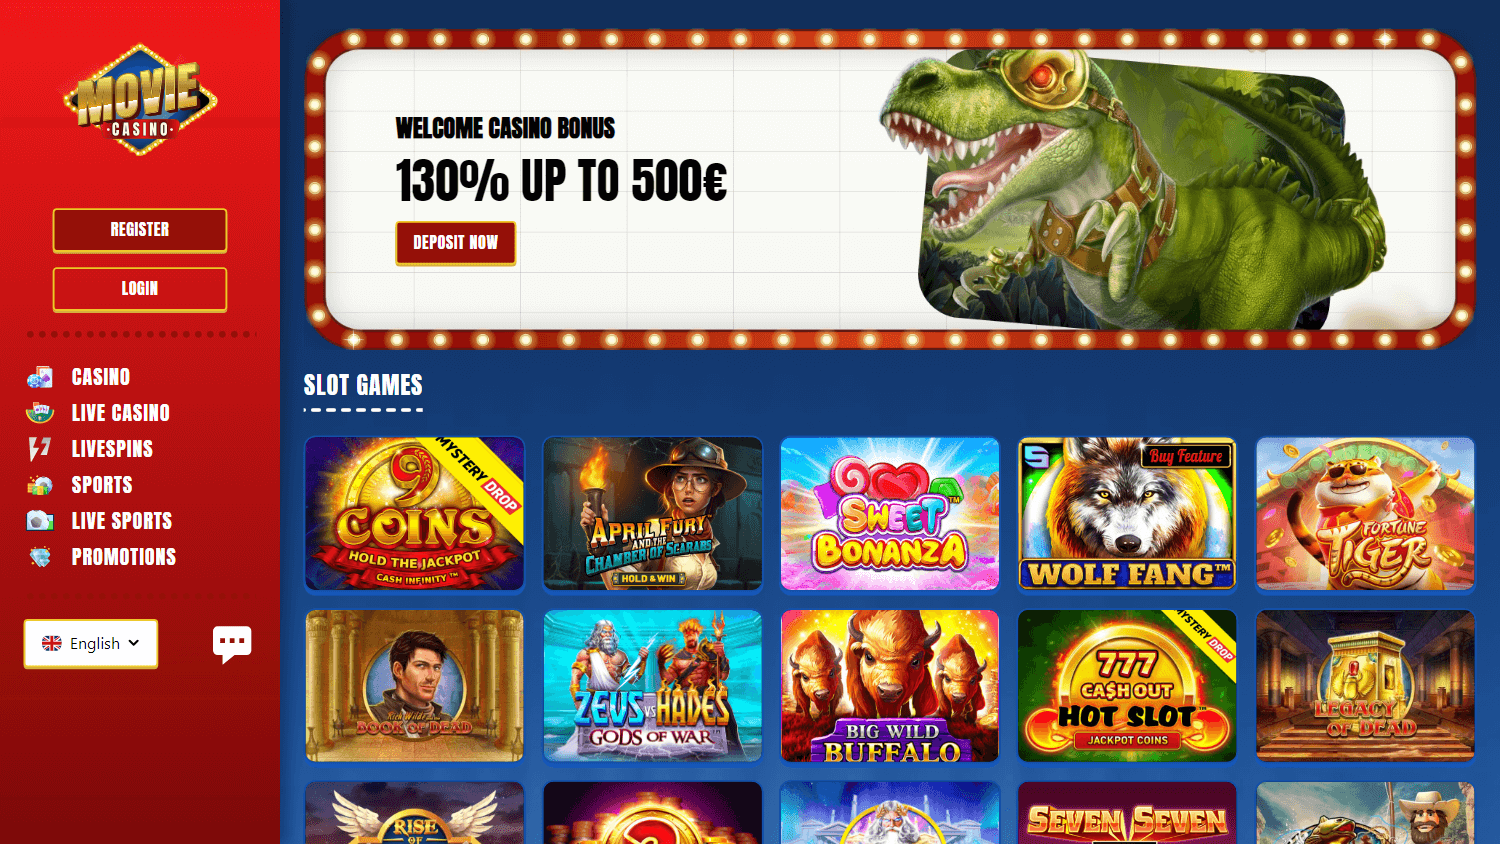 movie_casino_homepage_desktop